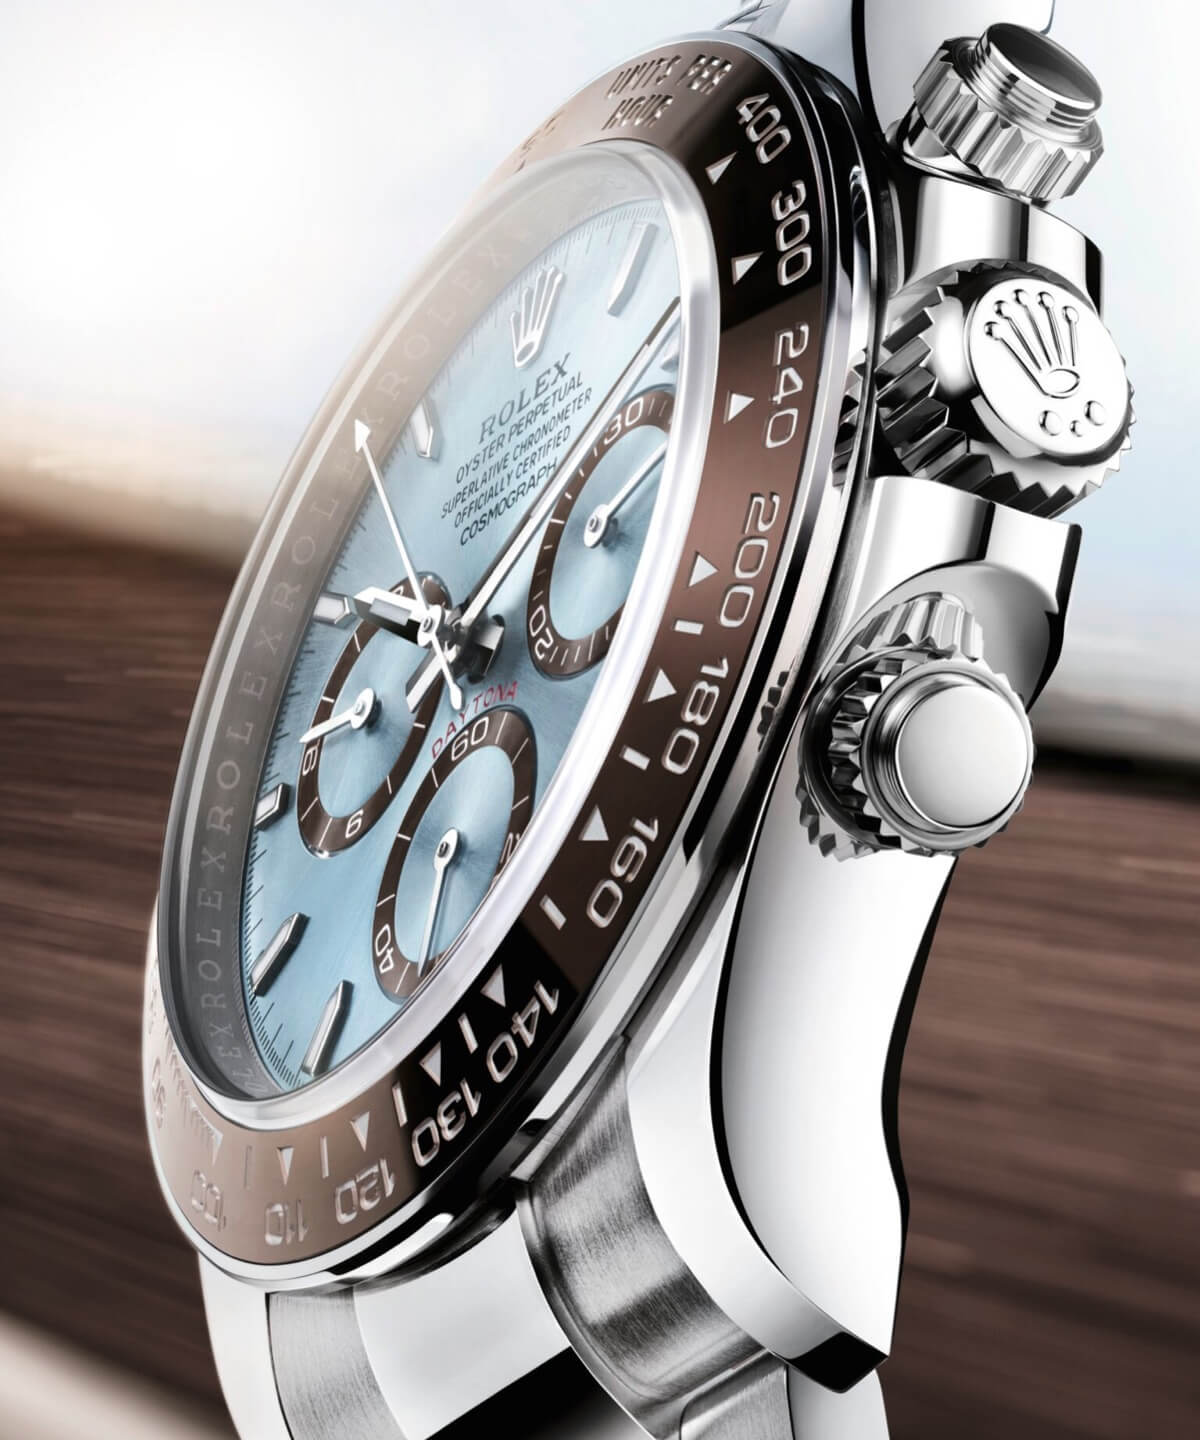 rolex cosmograph daytona watches - global watch company